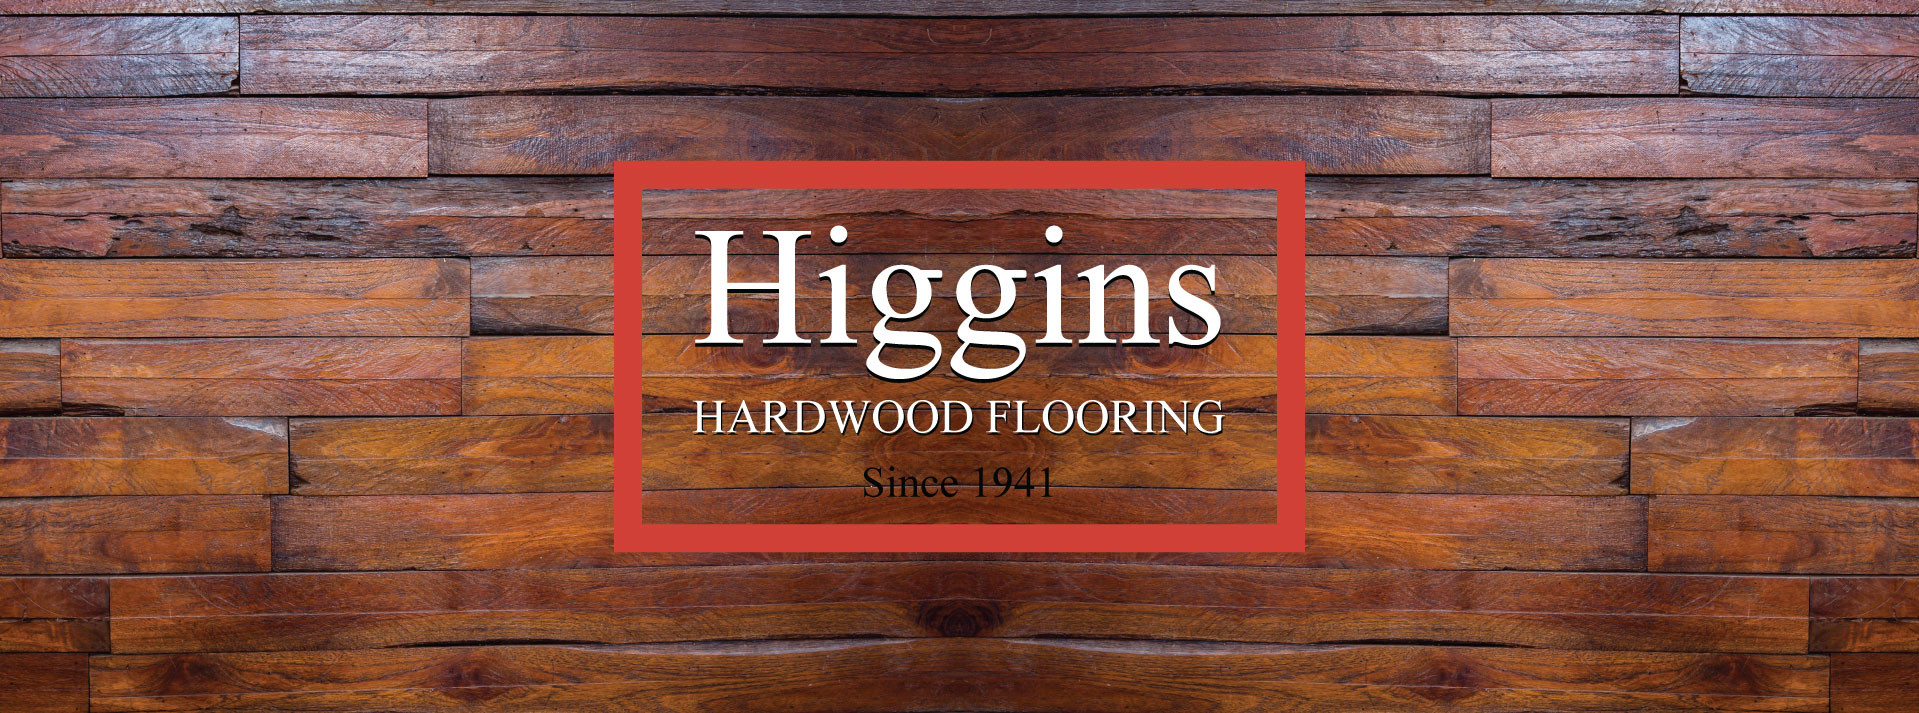 hardwood floor refinishing pickering of higgins hardwood flooring in peterborough oshawa lindsay ajax with office hours